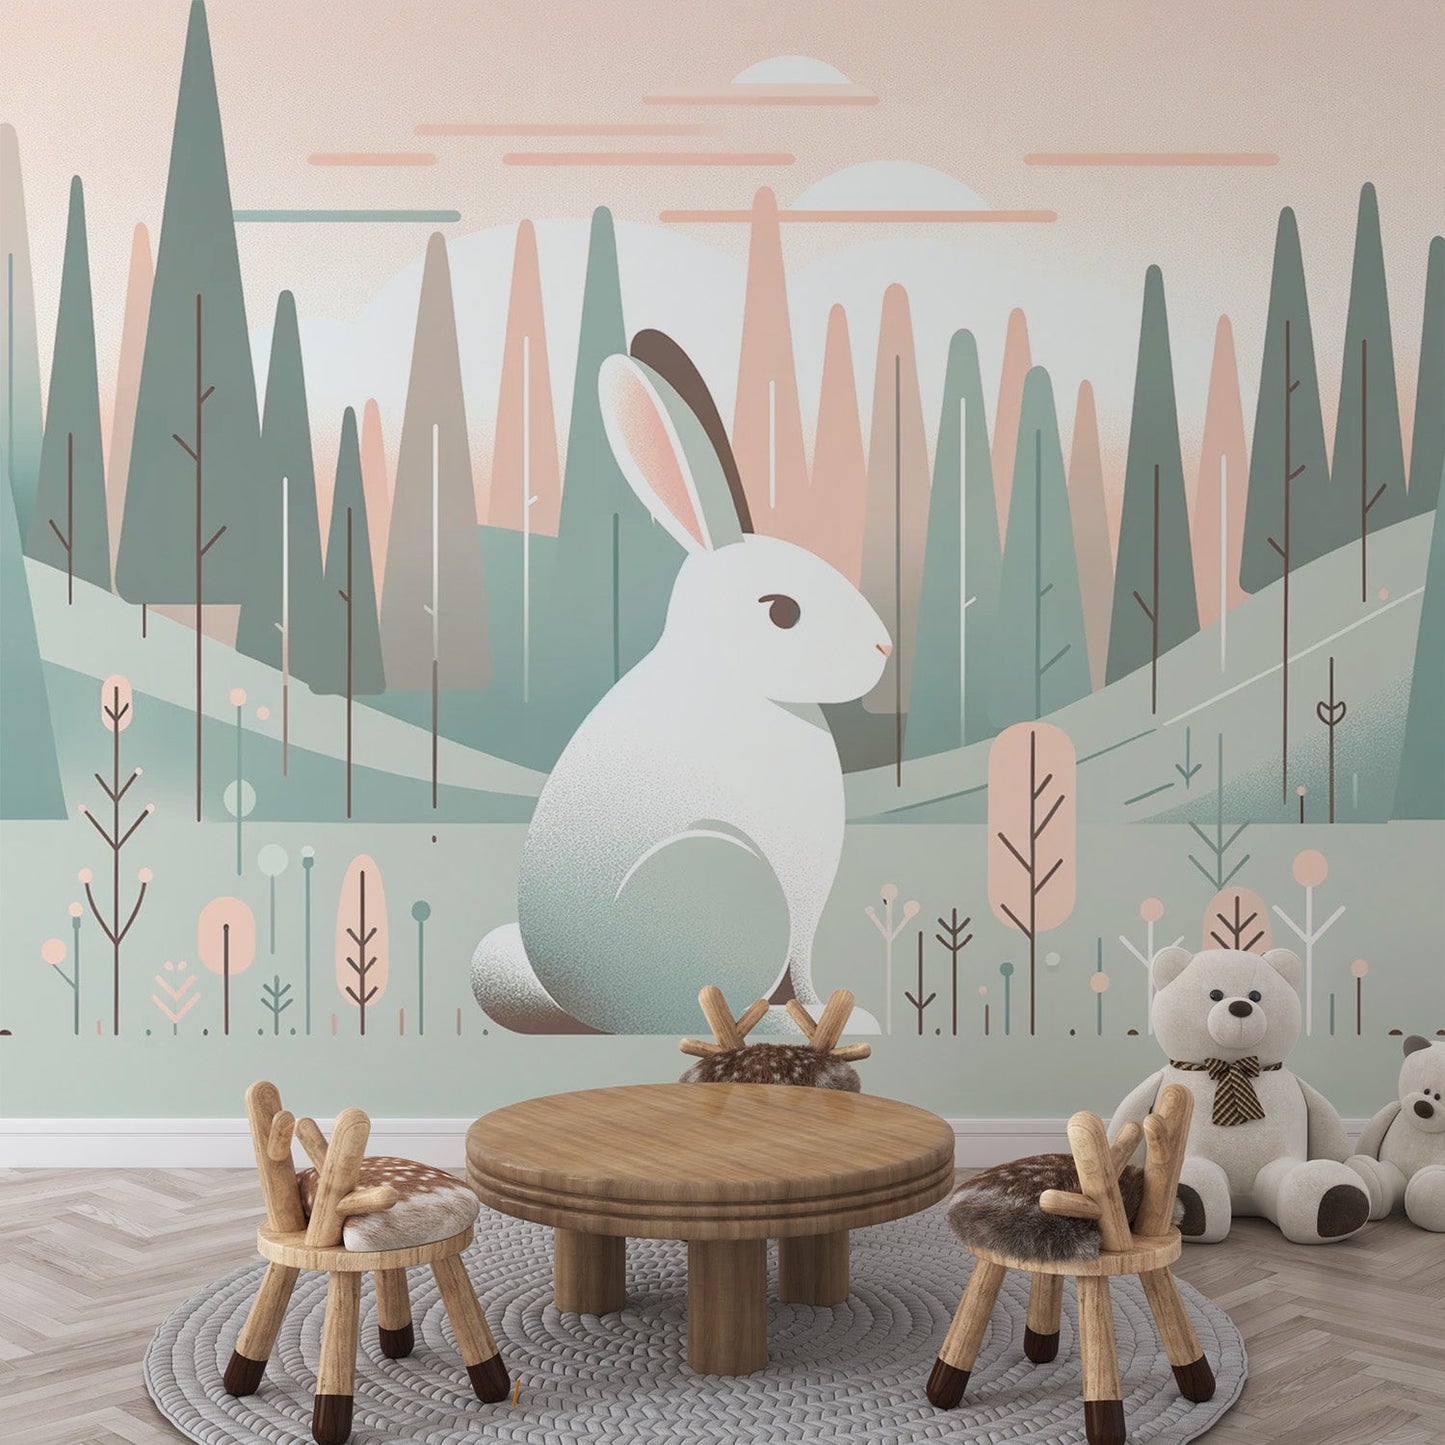 Rabbit Wallpaper | Profile in a Geometric Forest